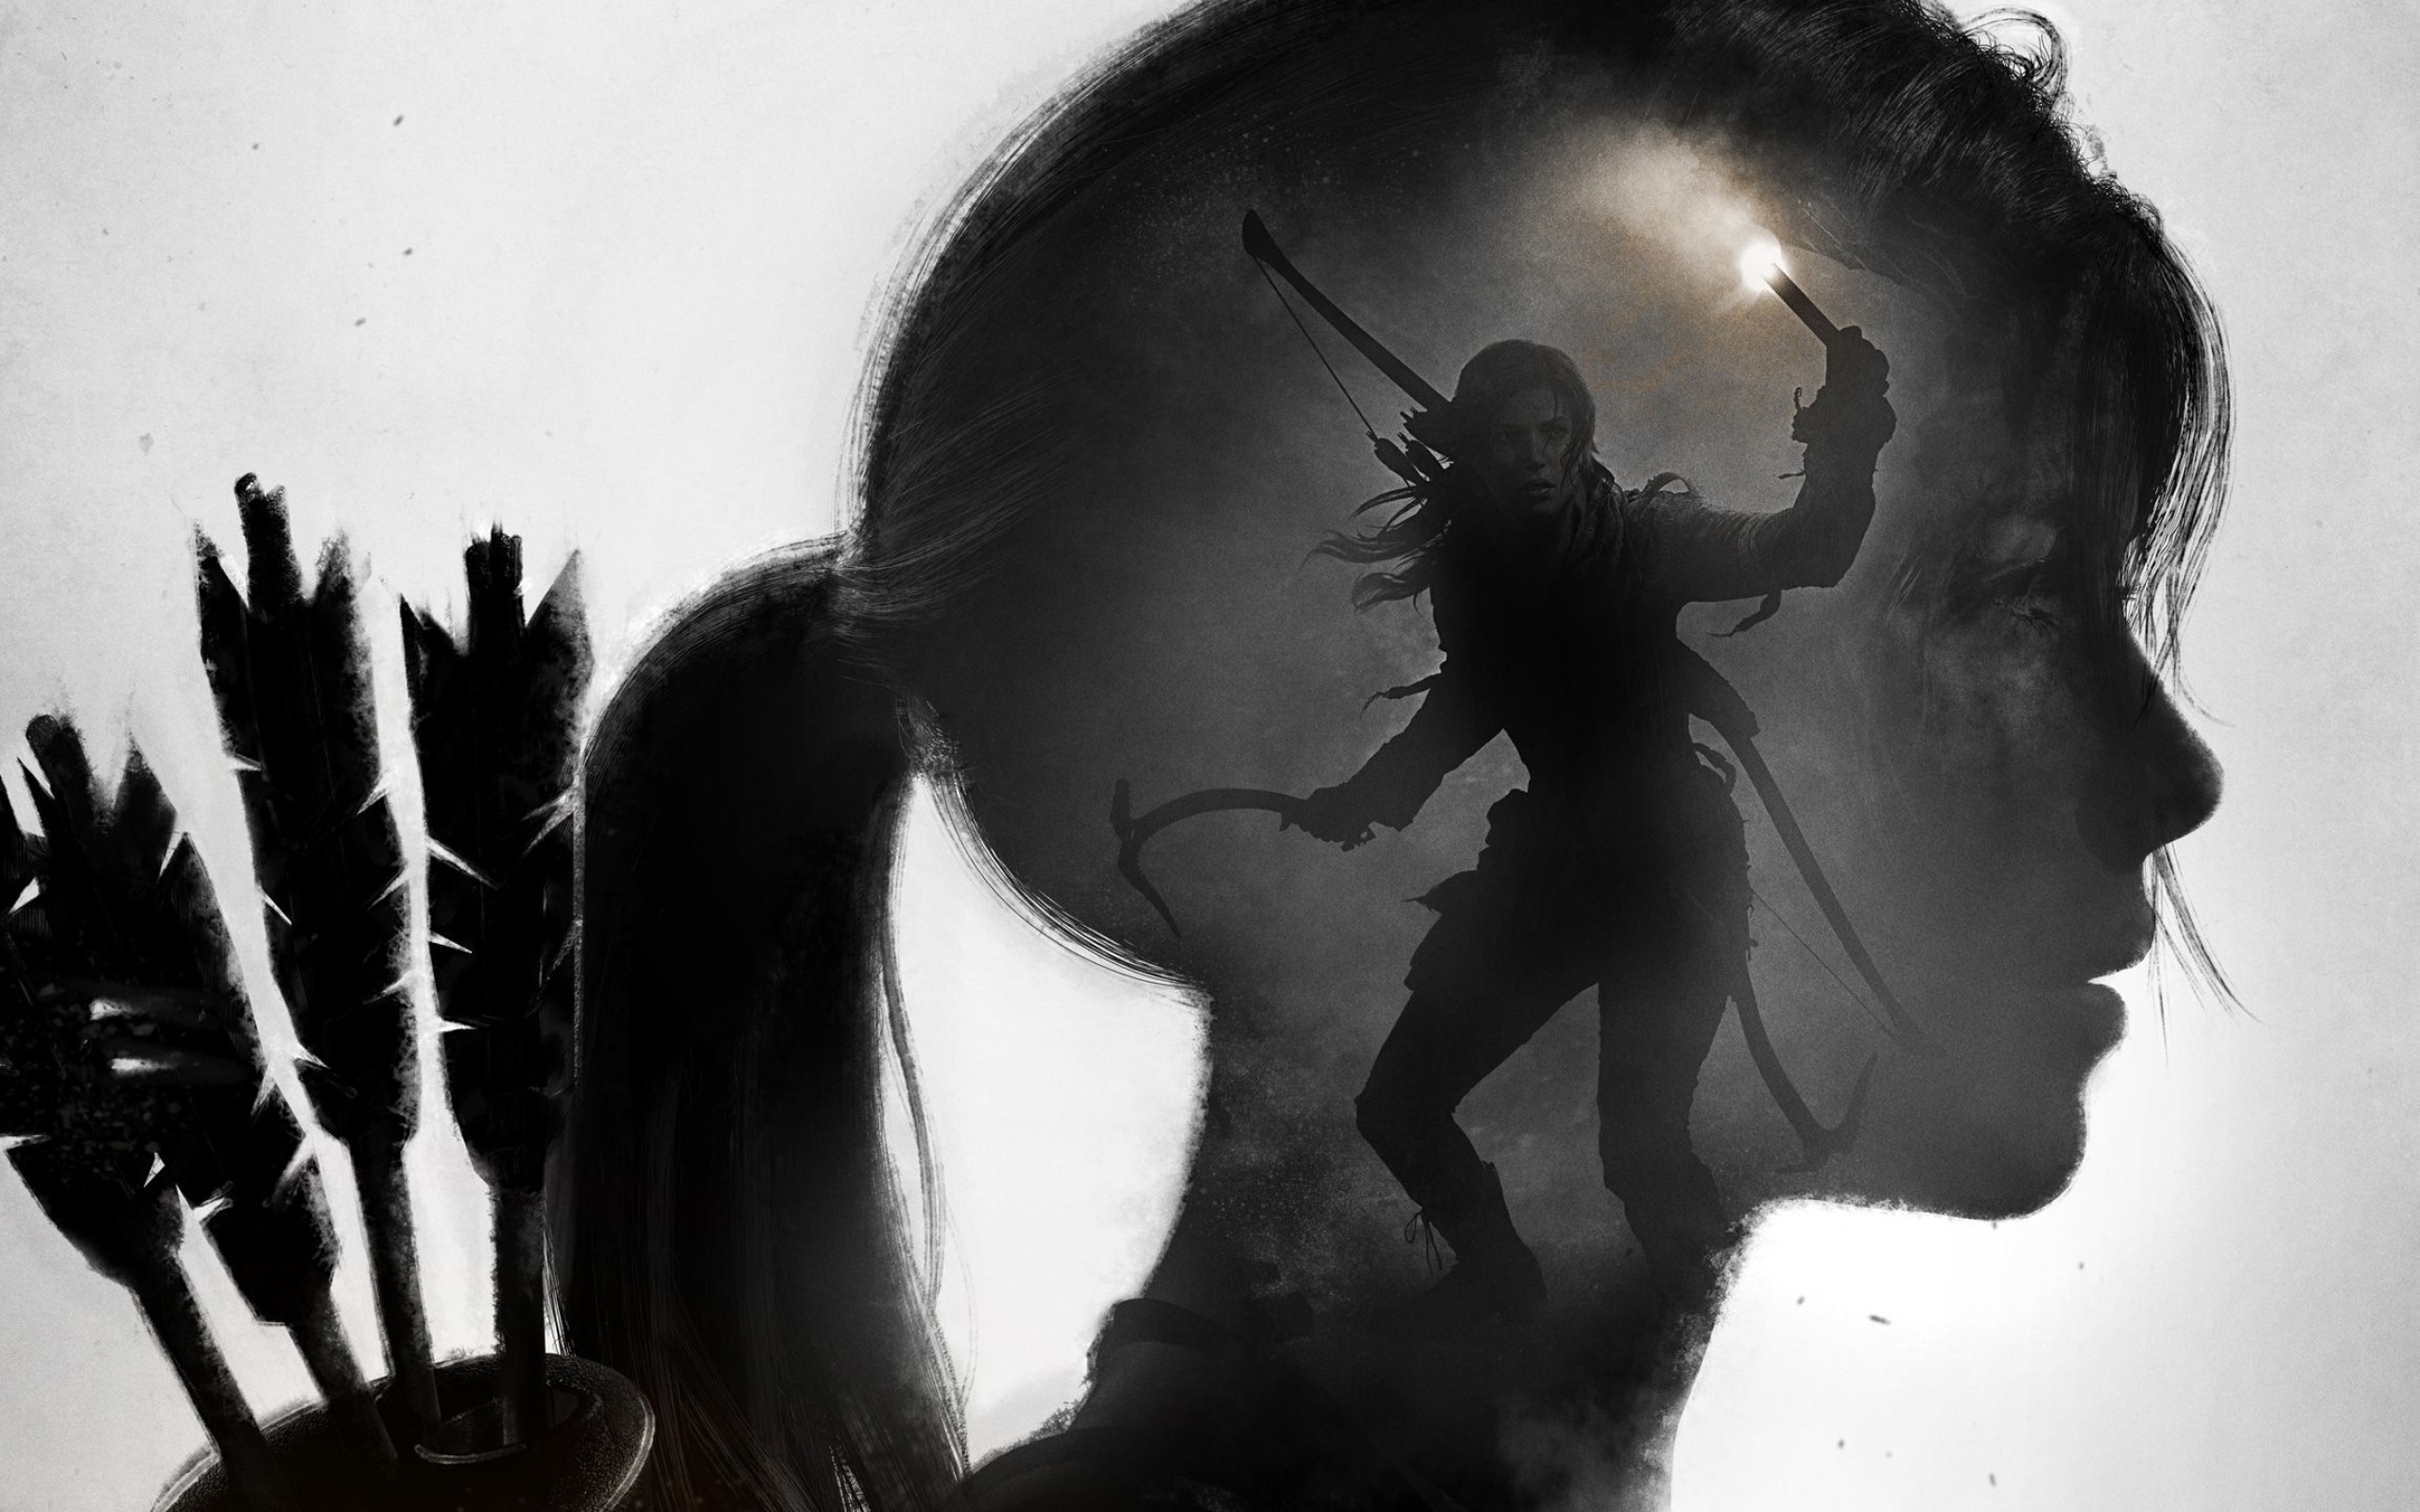 2560x1600 Rise of the Tomb Raider I Shall Rise Wallpaper (DESKTOP BACKGROUNDS) | Best Wallpapers HQ | Ladrones de tumbas, Tomb raider underworld, Fotograf&Atilde;&shy;a de arte oscur